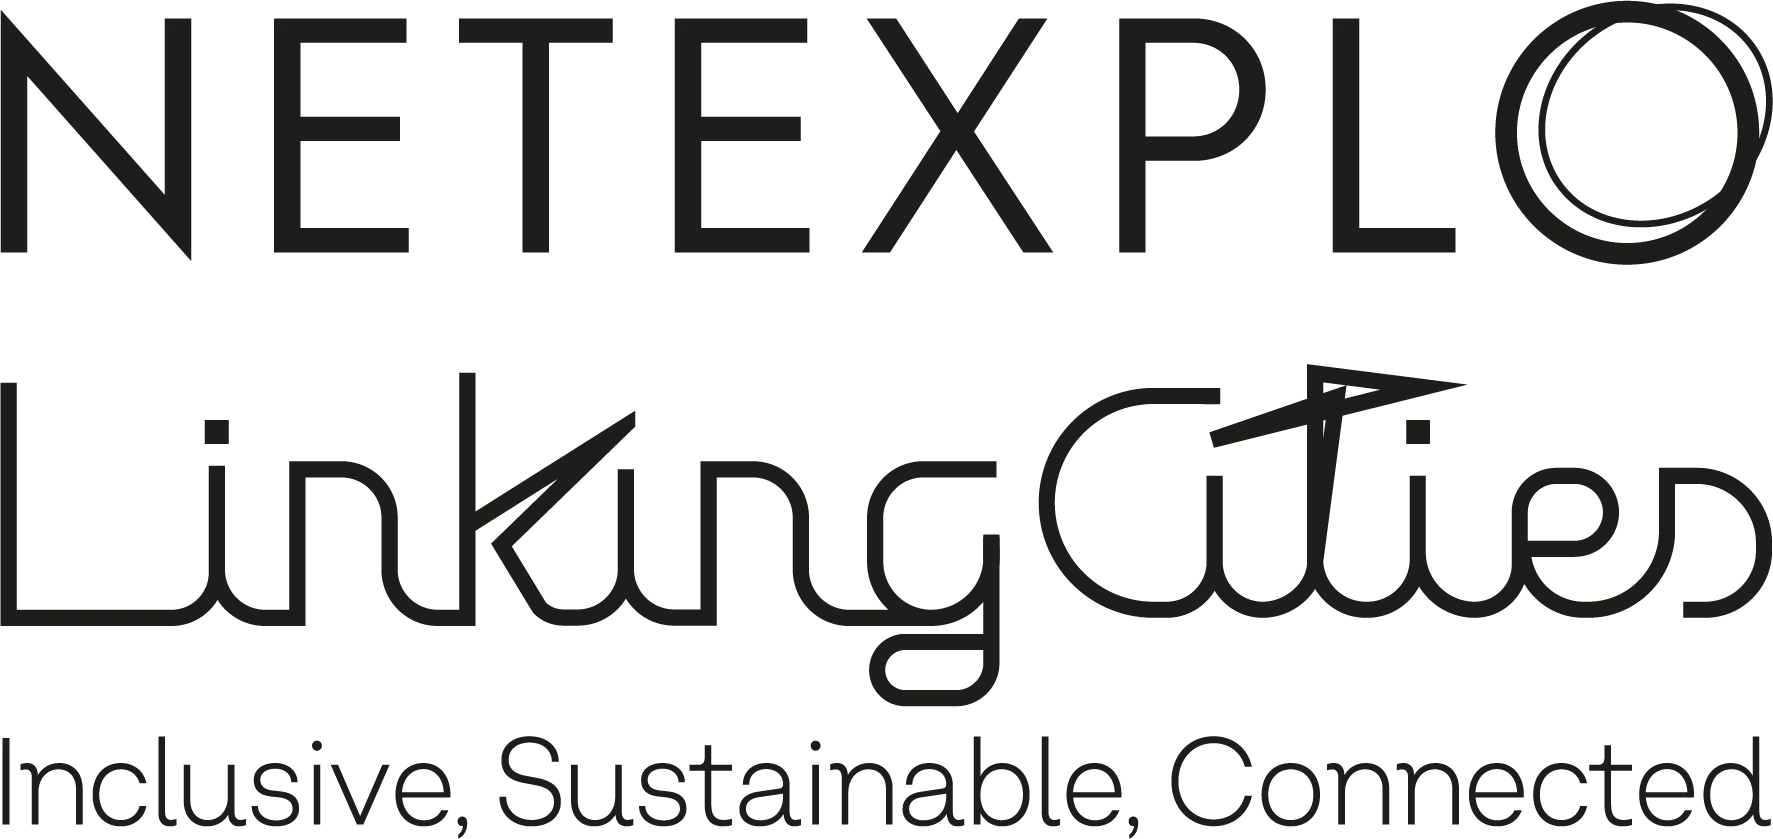 Netexplo Linking Cities